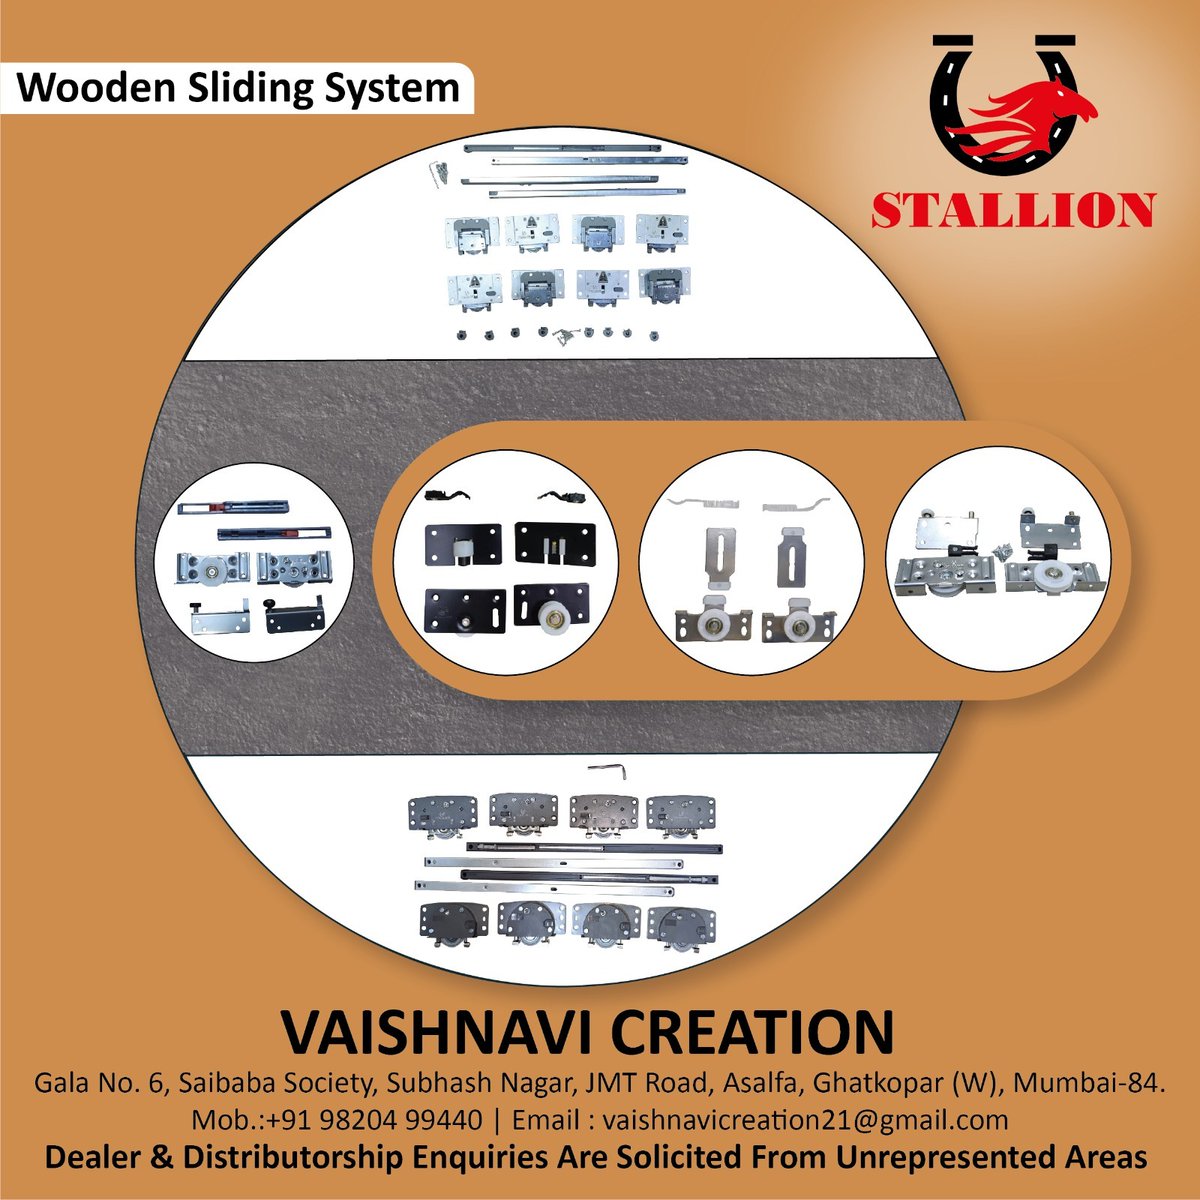 Discover Stallion: Your Solution to Smooth Sliding Doors.
#Stallion #StallionMumbai #StallionIndia #WoodenSlidingSolutions #VaishnaviCreation #Mumbai #WoodenSlidingSystem #DoorHardware #SlidingDoorSystems #WoodenSlidingFitting #SlidingDoorHardware #SlidingDoorFittings #Hardware